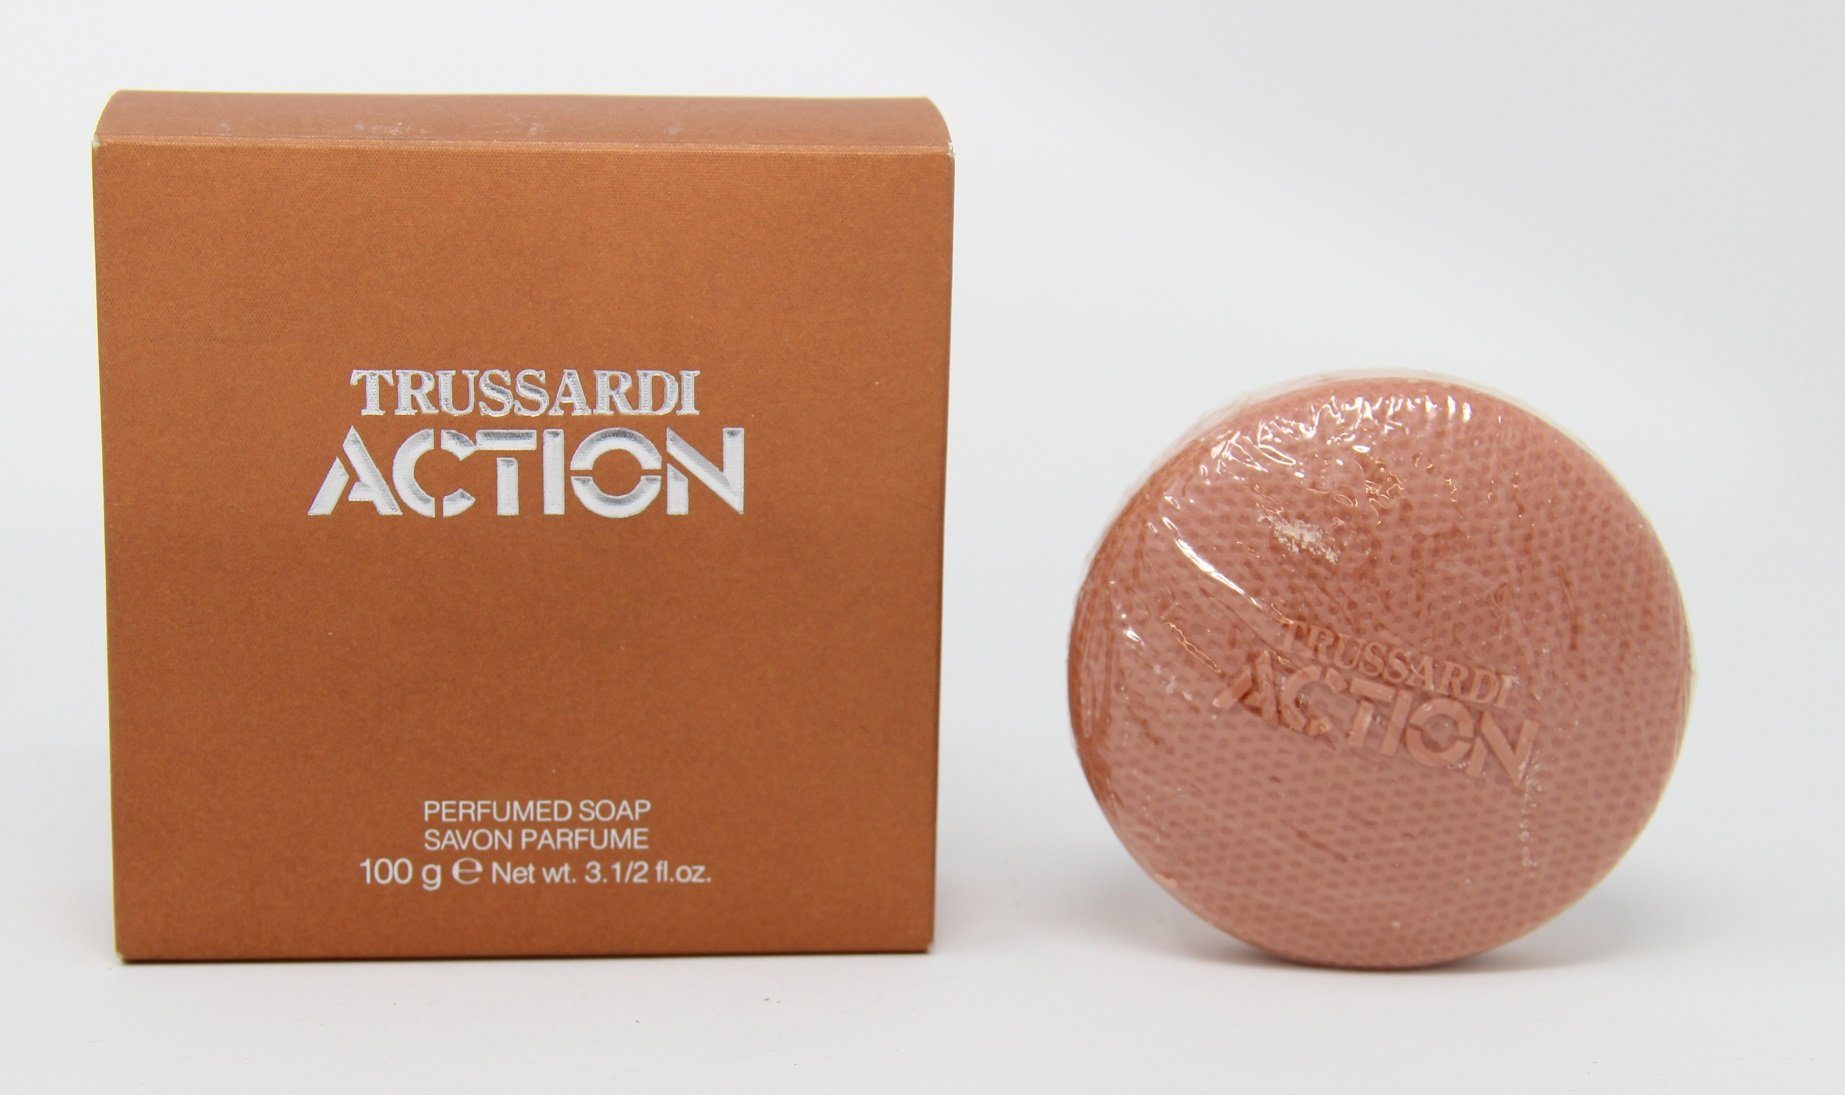 Trussardi Handseife Trussardi Action Perfumed Soap Seife 100g | Handseifen